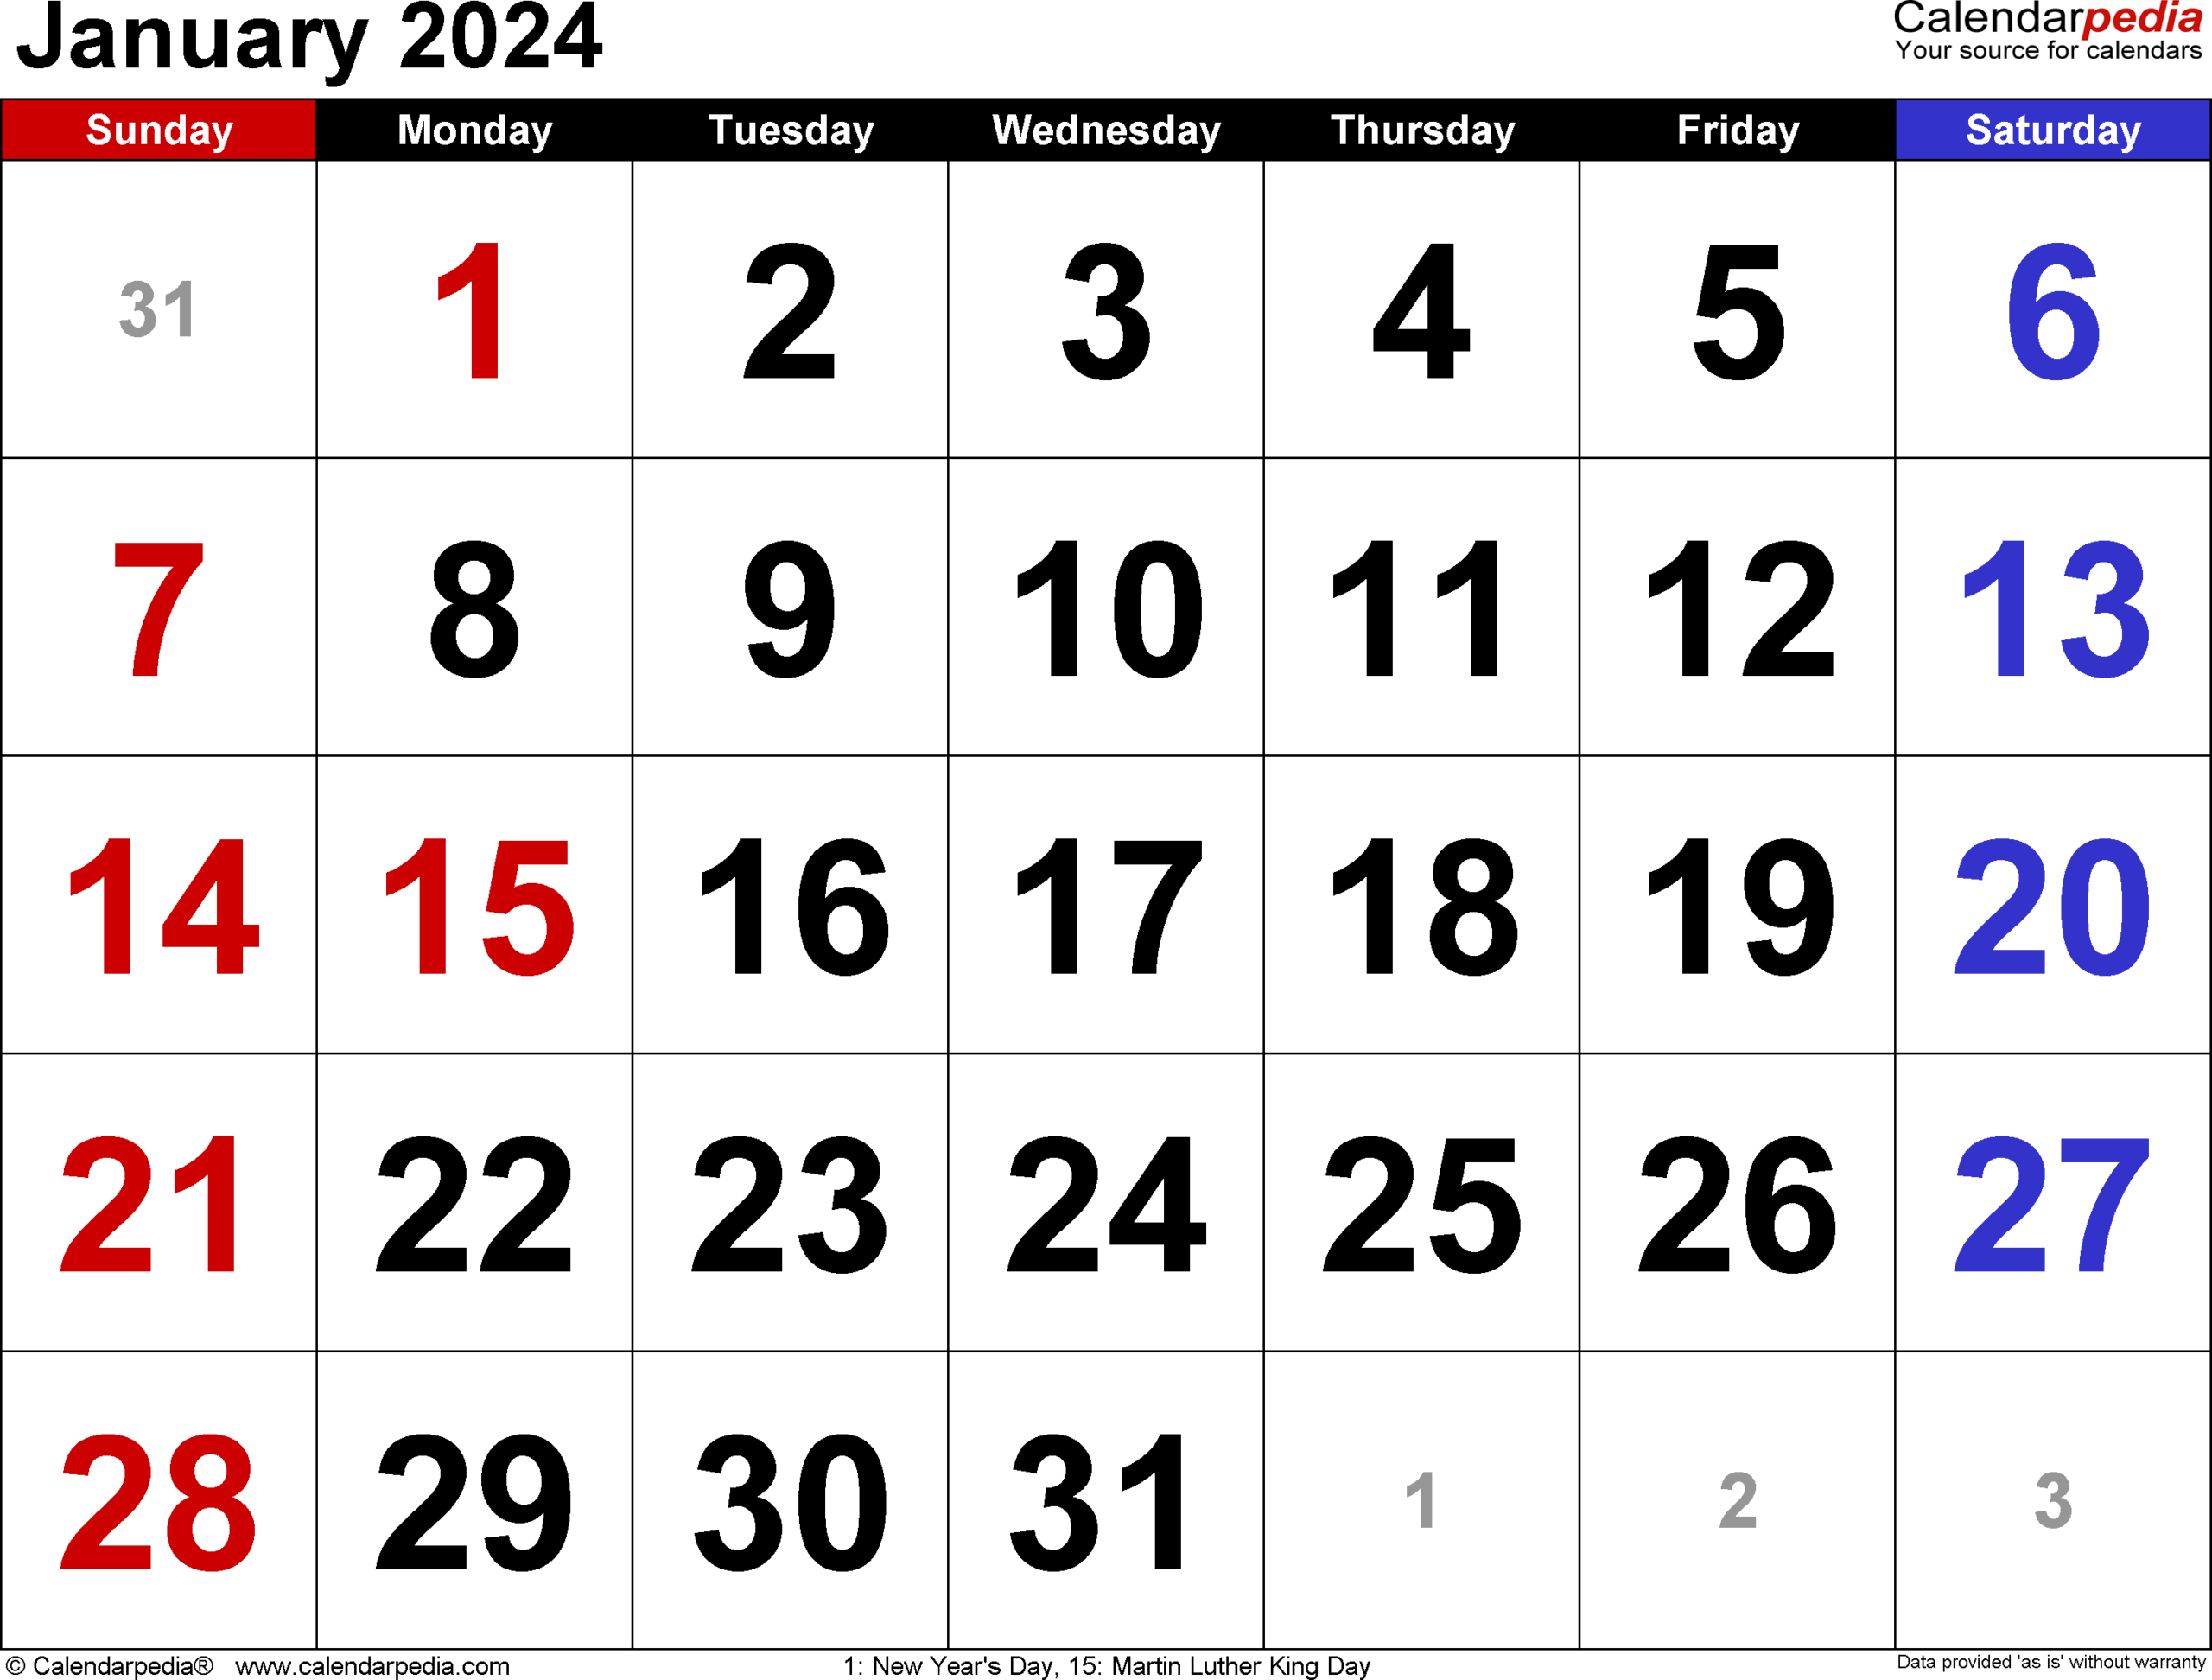 January 2024 Calendar | Templates For Word, Excel And Pdf | Printable Calendar 2024 Calendarpedia